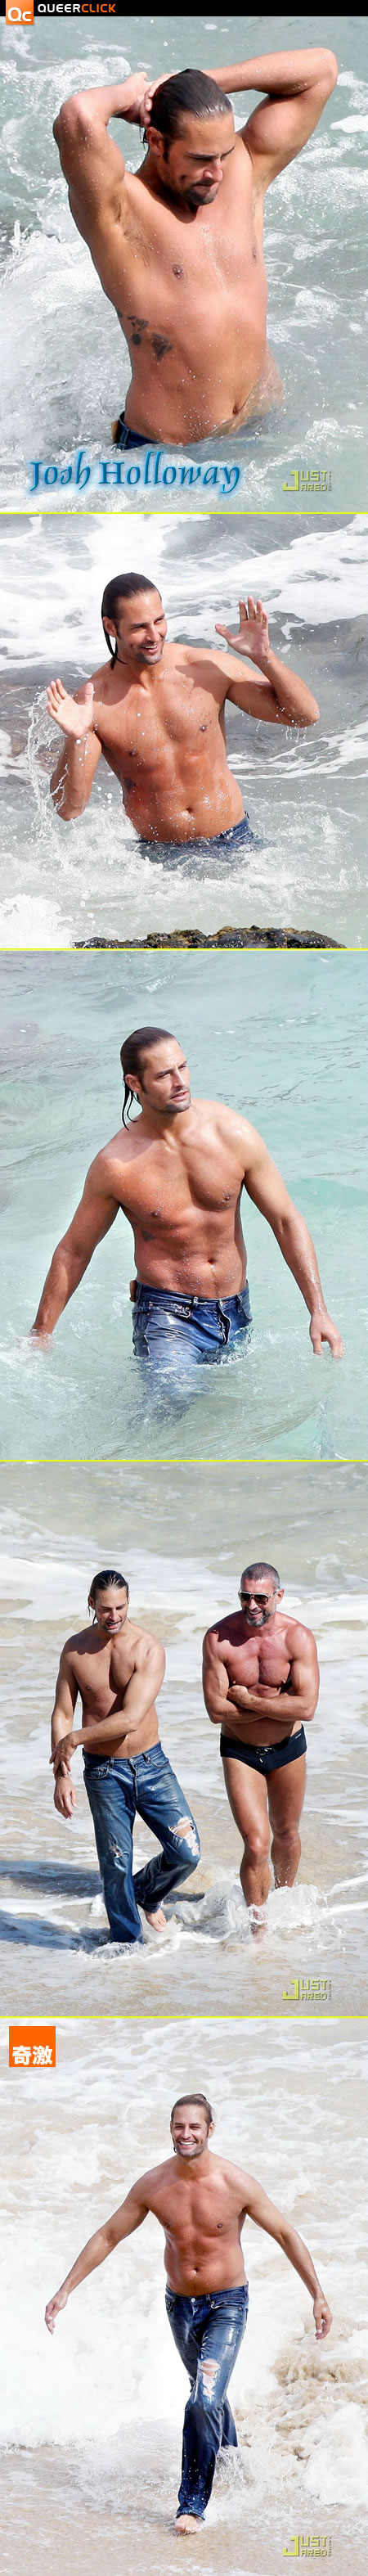 Josh Holloway is Shirtless